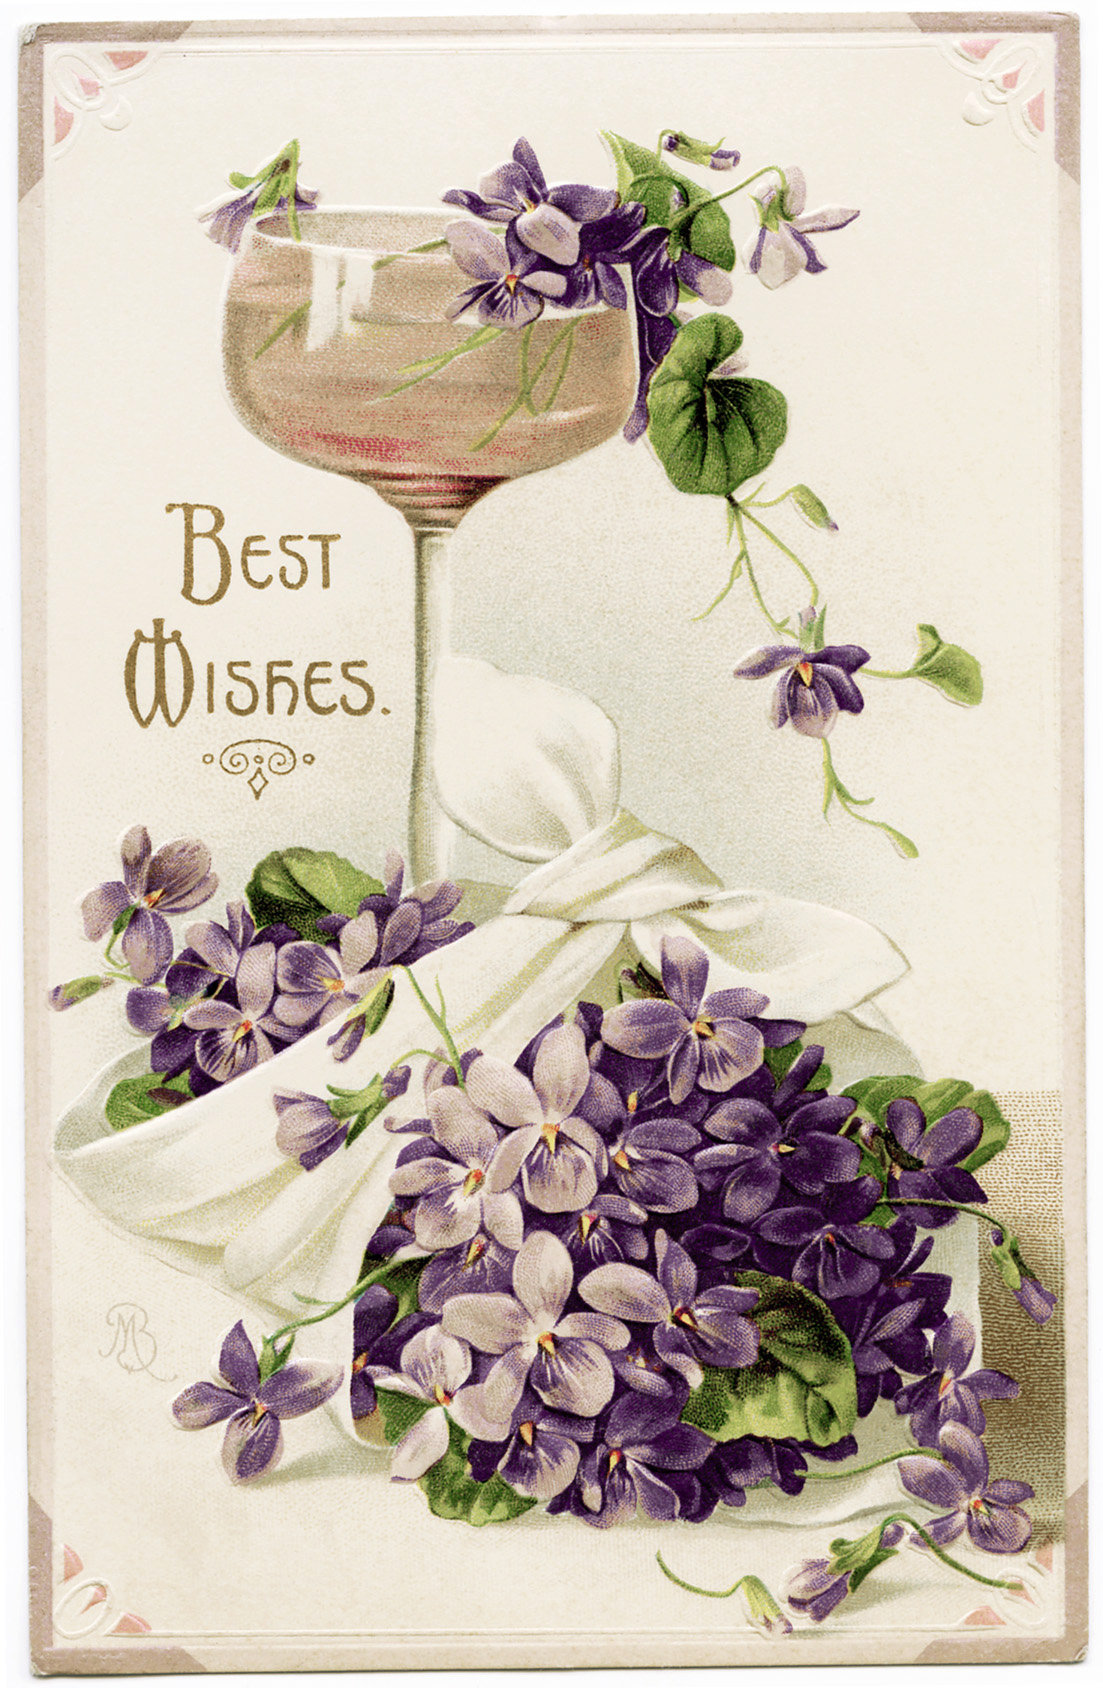 free public domain postcard, vintage violets image, best wishes postcard, wine glass illustration, purple flowers